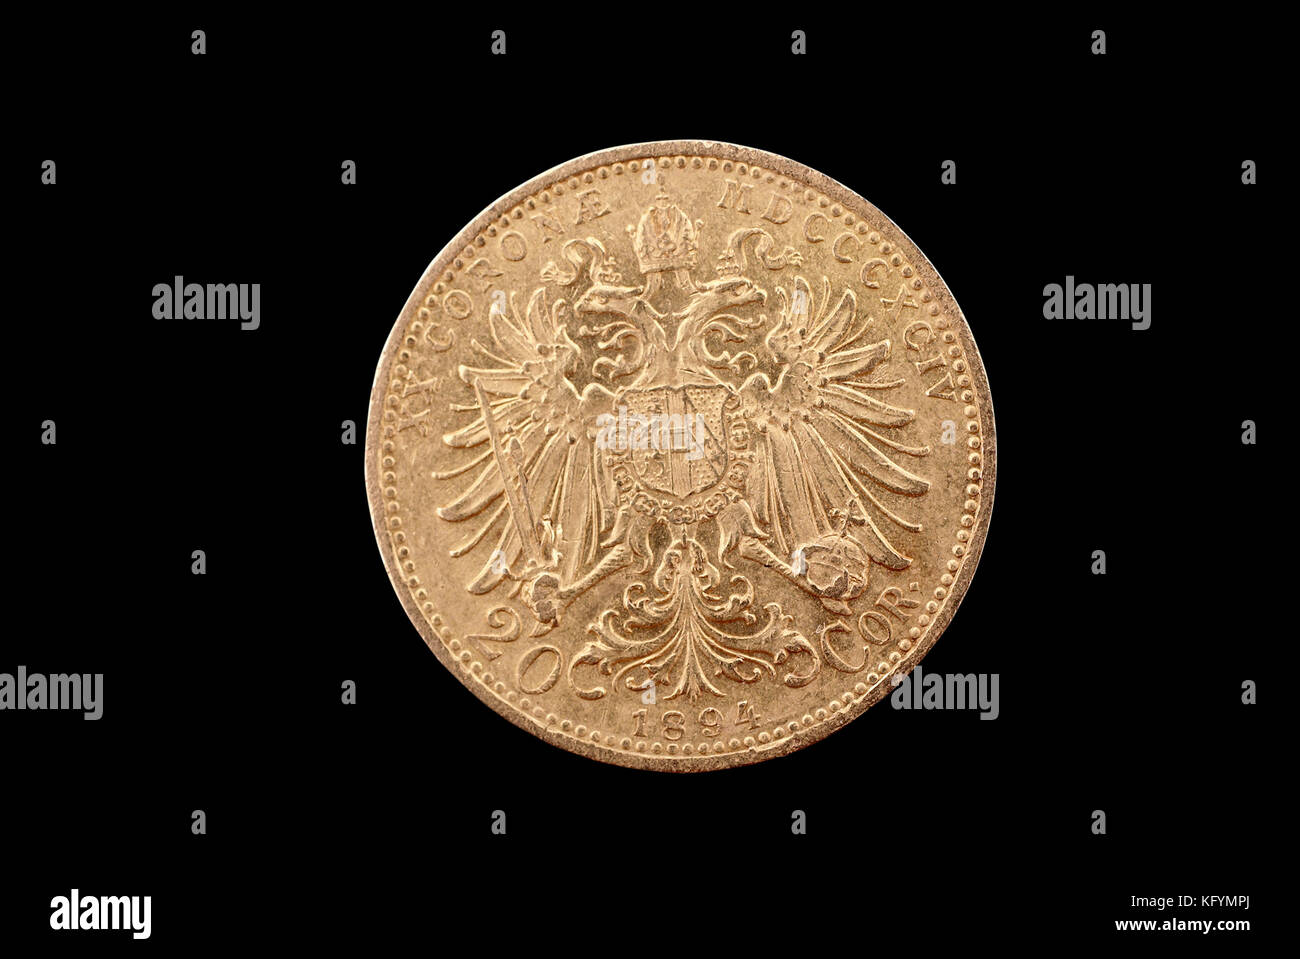 Austria-Ungheria antica moneta in oro (franz-Joseph, 20 corona, 1894). retromarcia (di moneta). Foto Stock